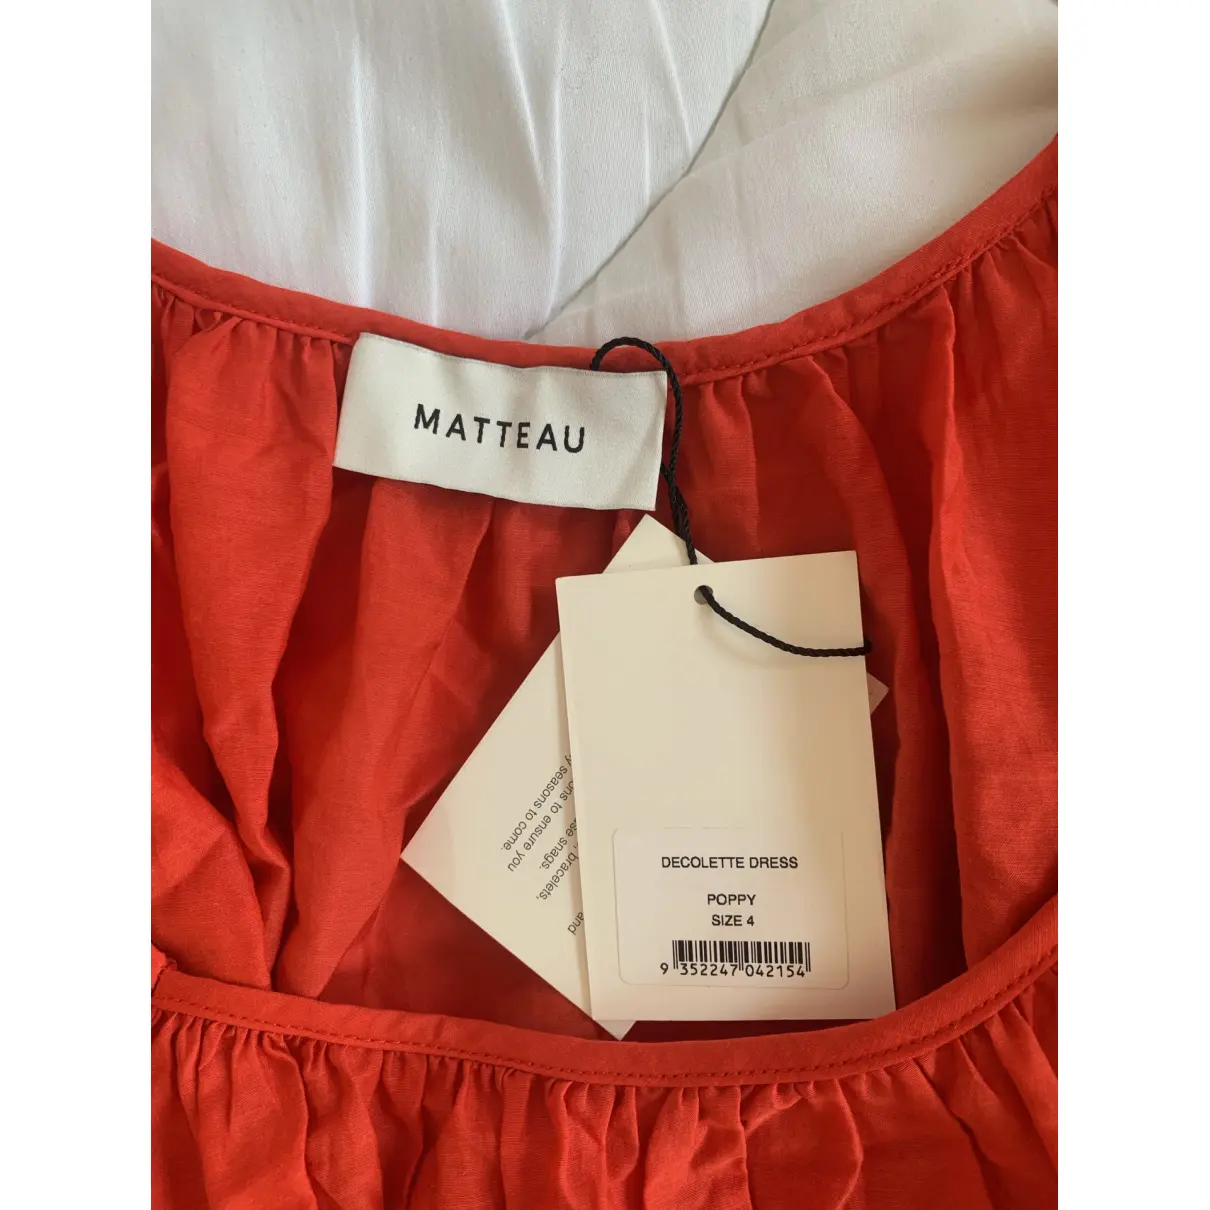 Buy Matteau Maxi dress online